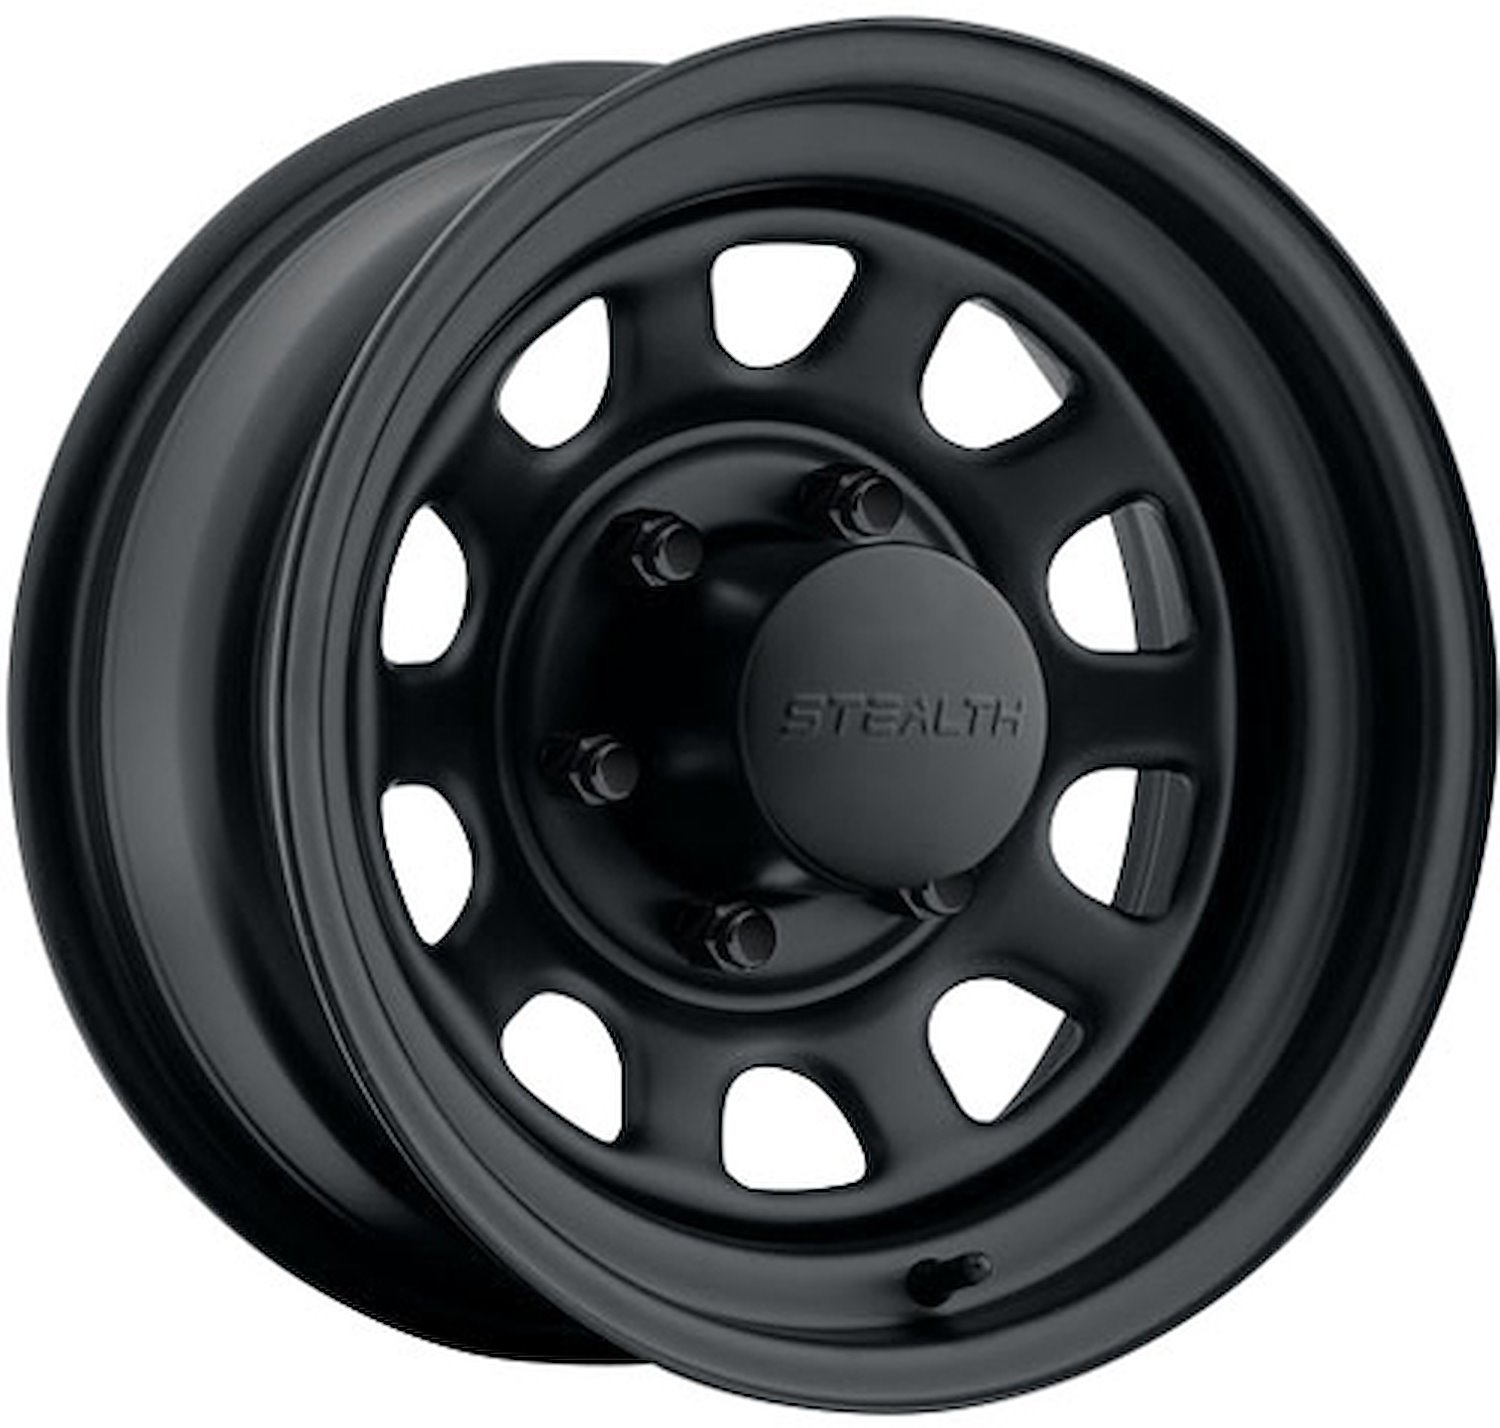 Stealth Black Daytona Wheel (Series 804) Size: 15" x 12"